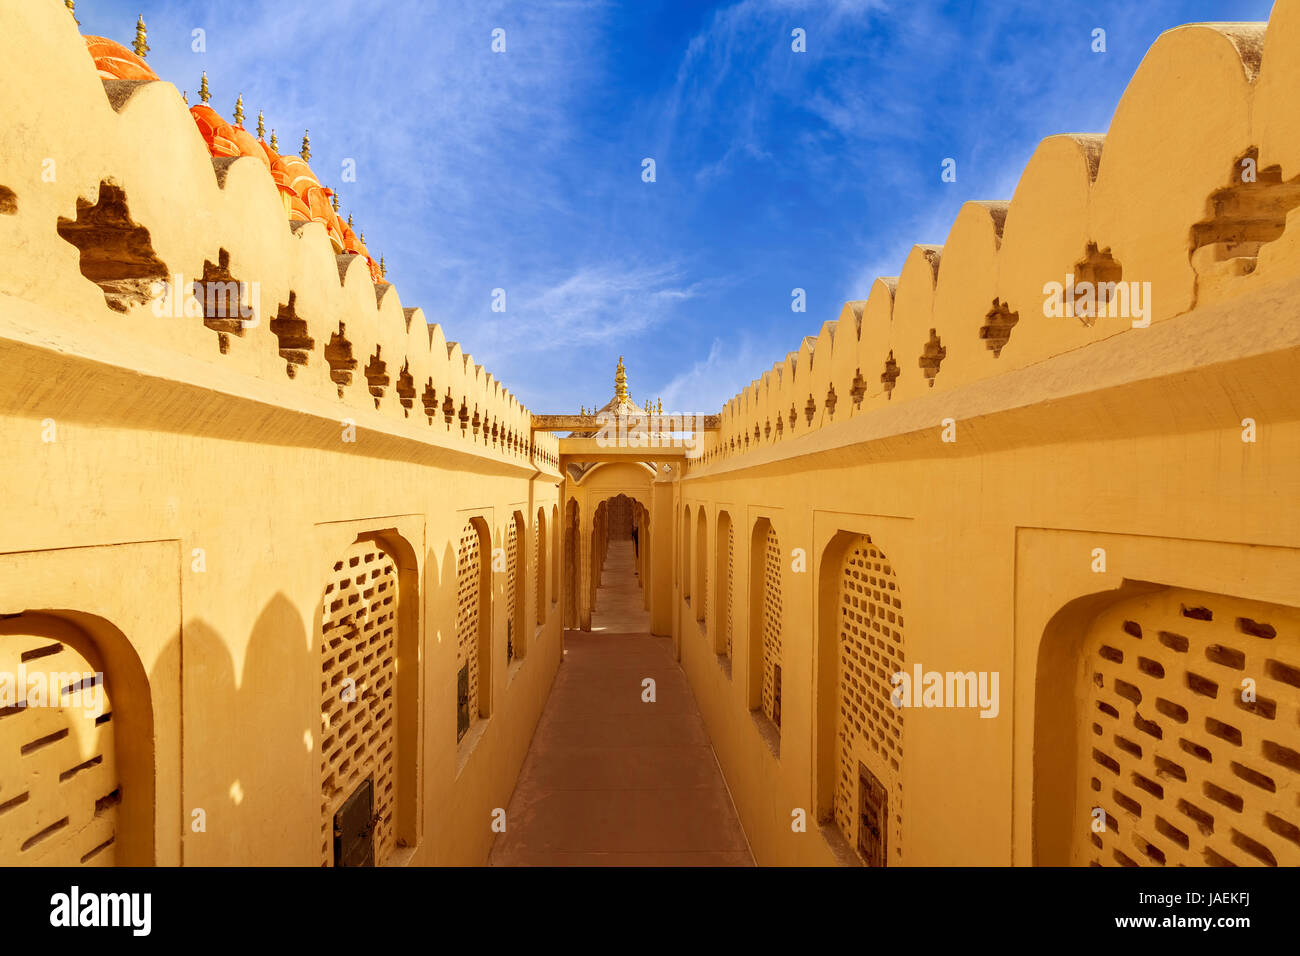 Corridoi di Hawa Mahal Palace (Palazzo dei venti), Jaipur, Rajasthan Foto Stock